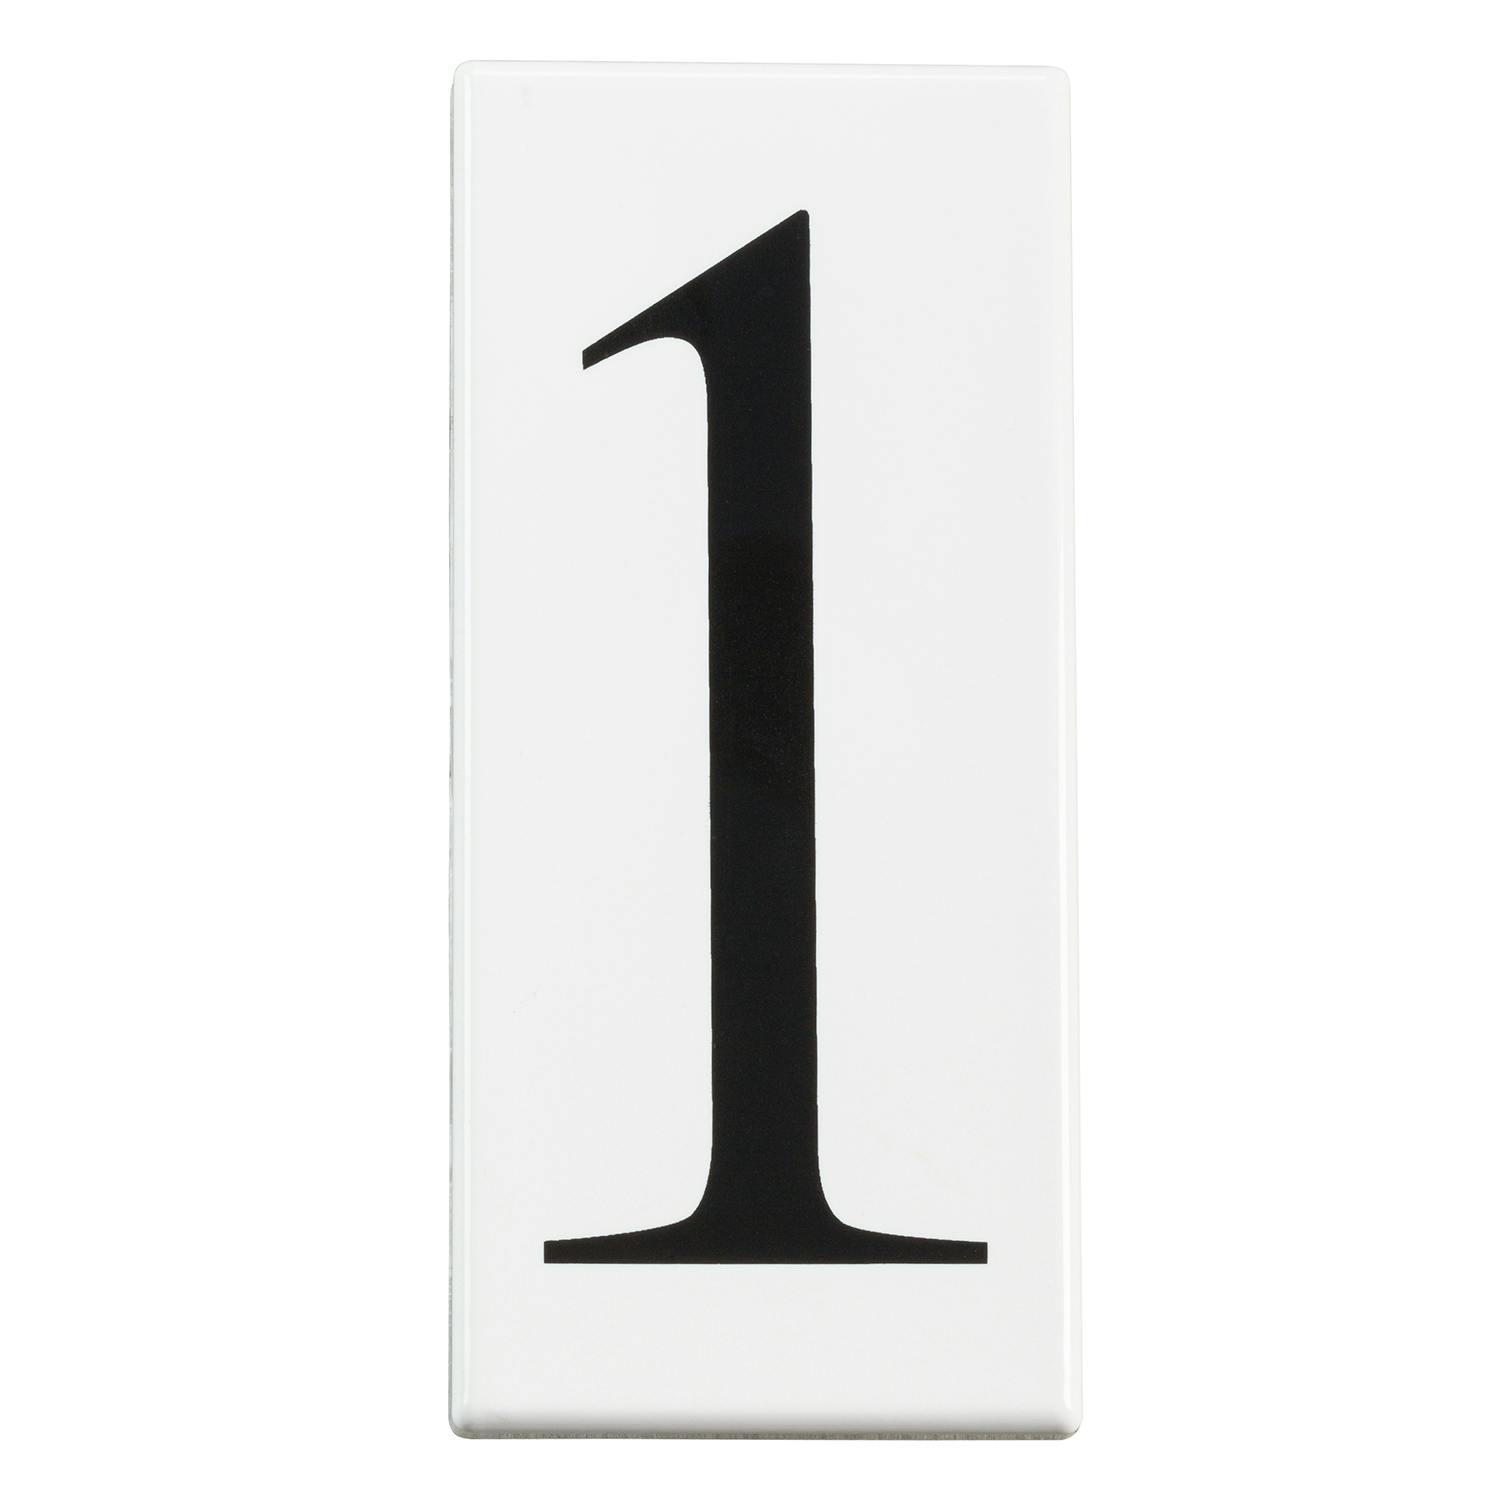 Address Light Number 1 Panel White on a white background